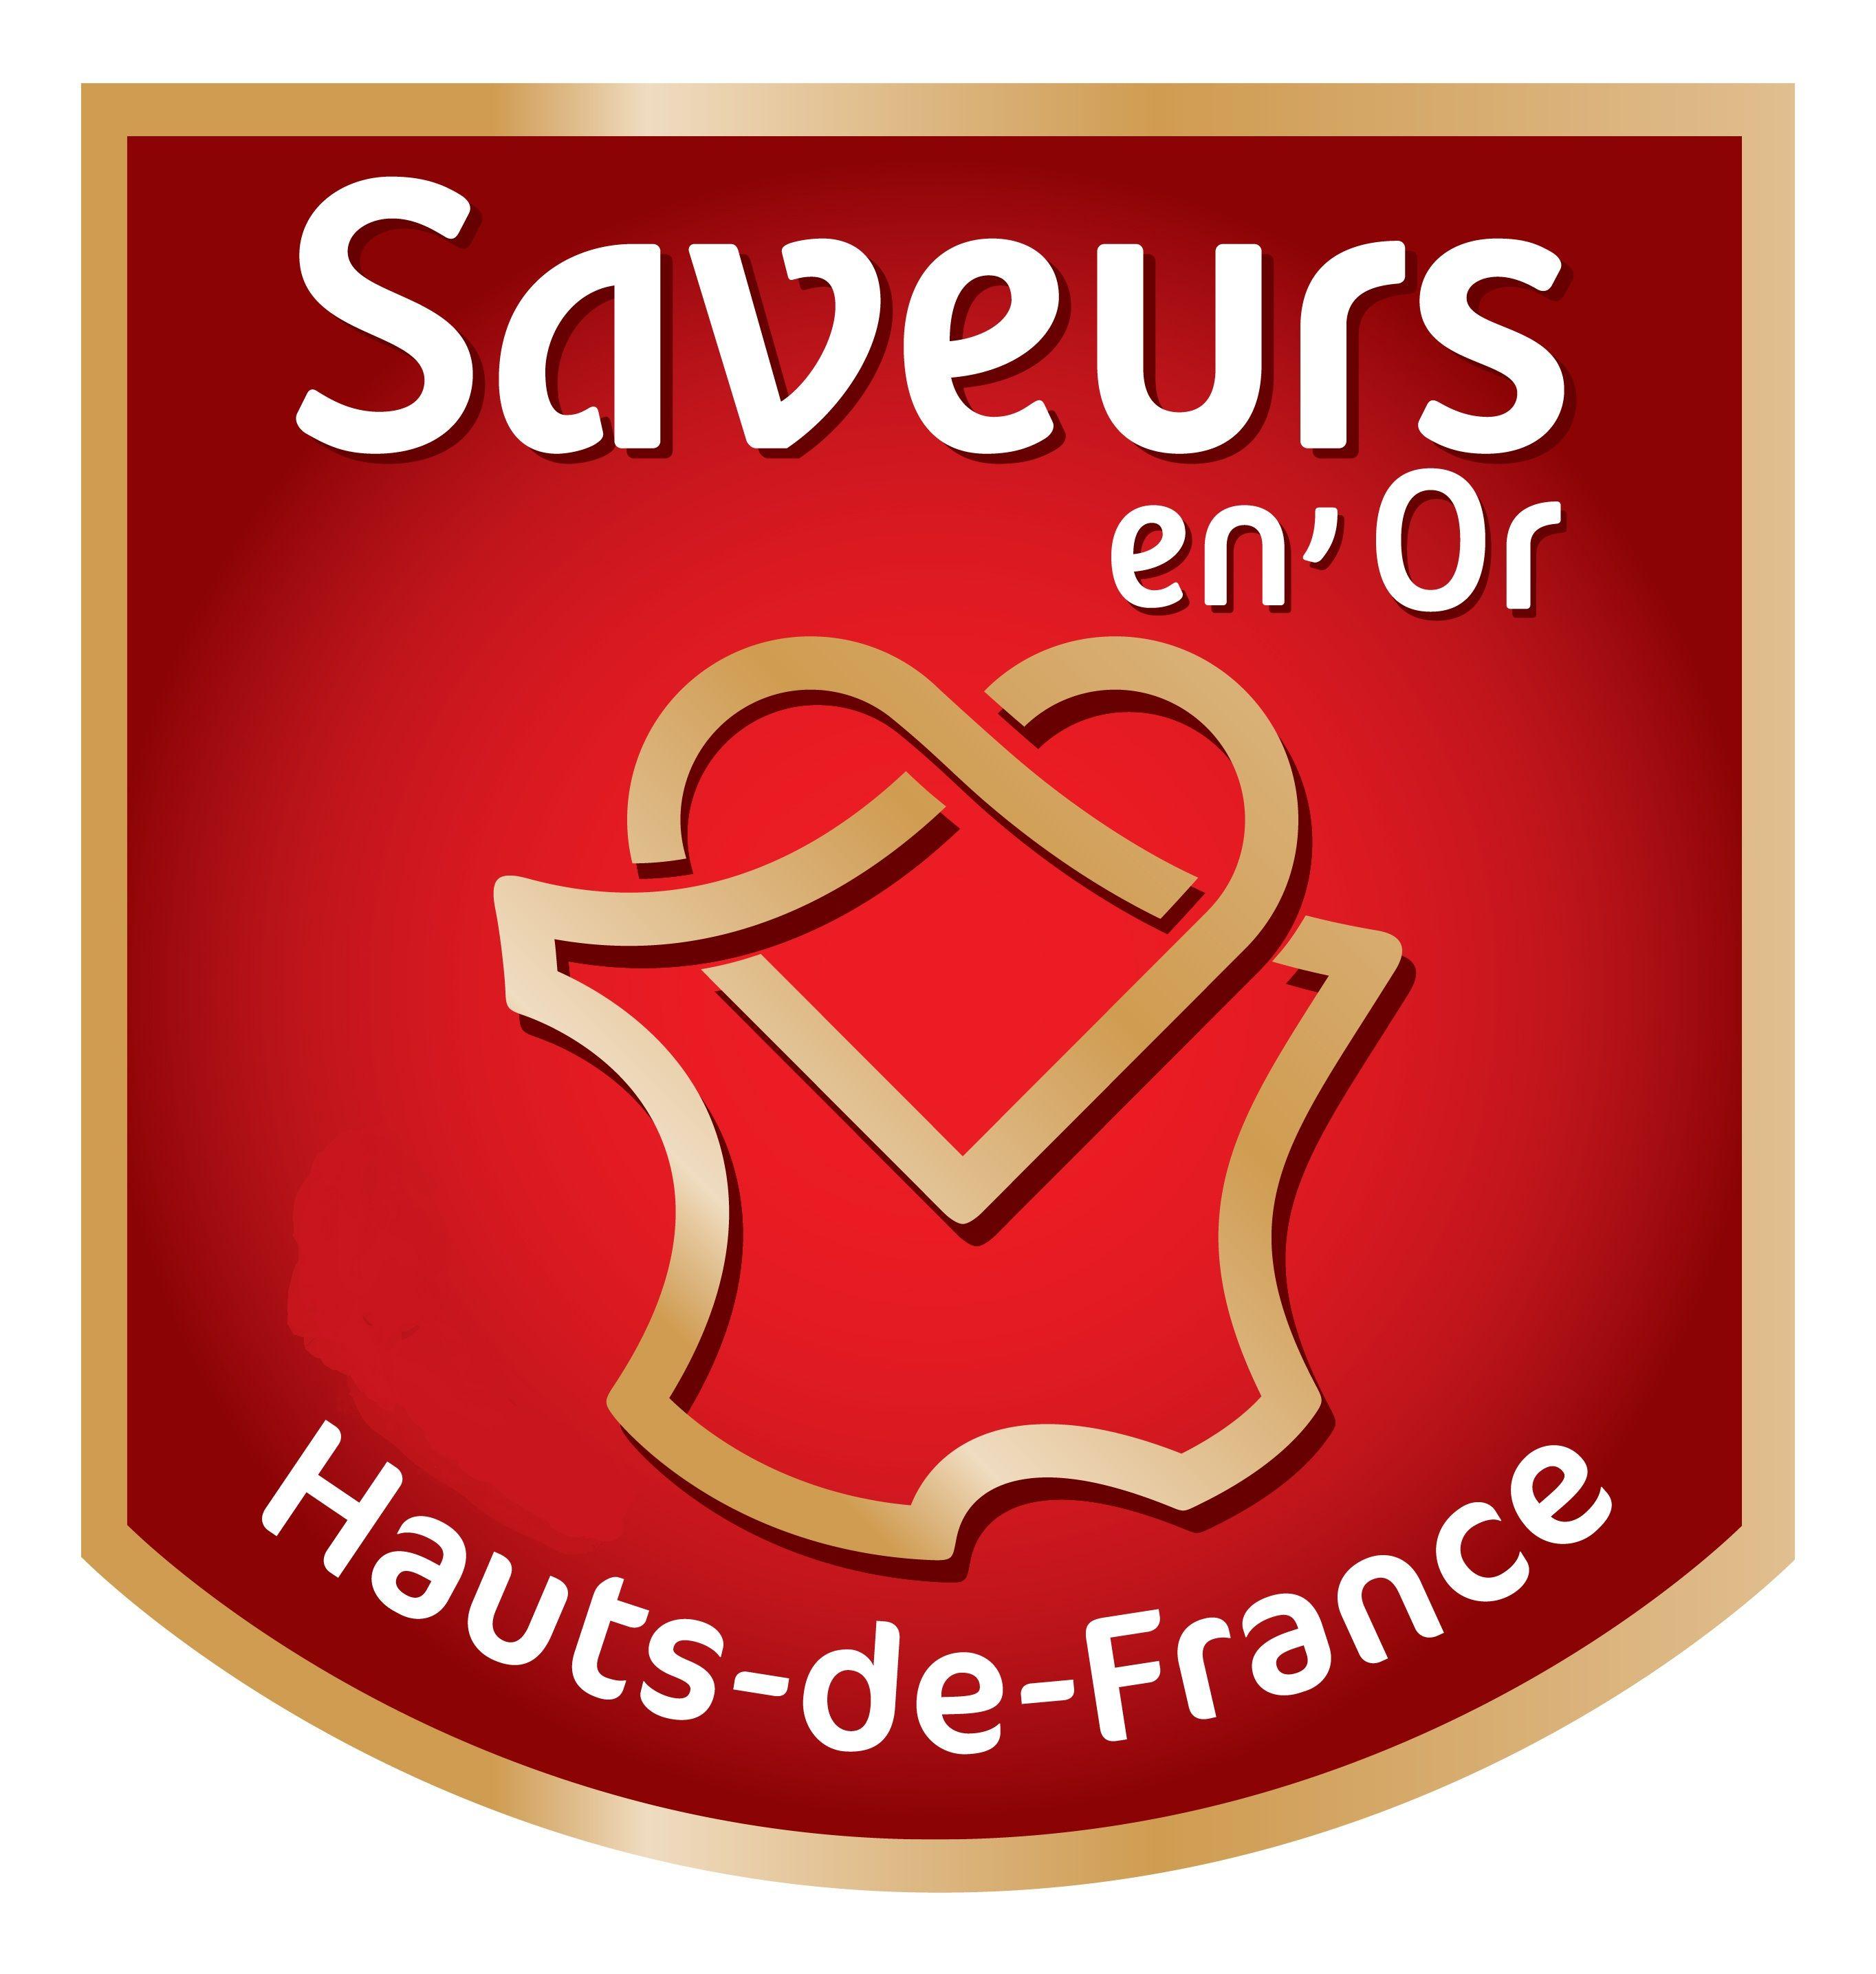 Saveur Logo - Saveurs en'Or